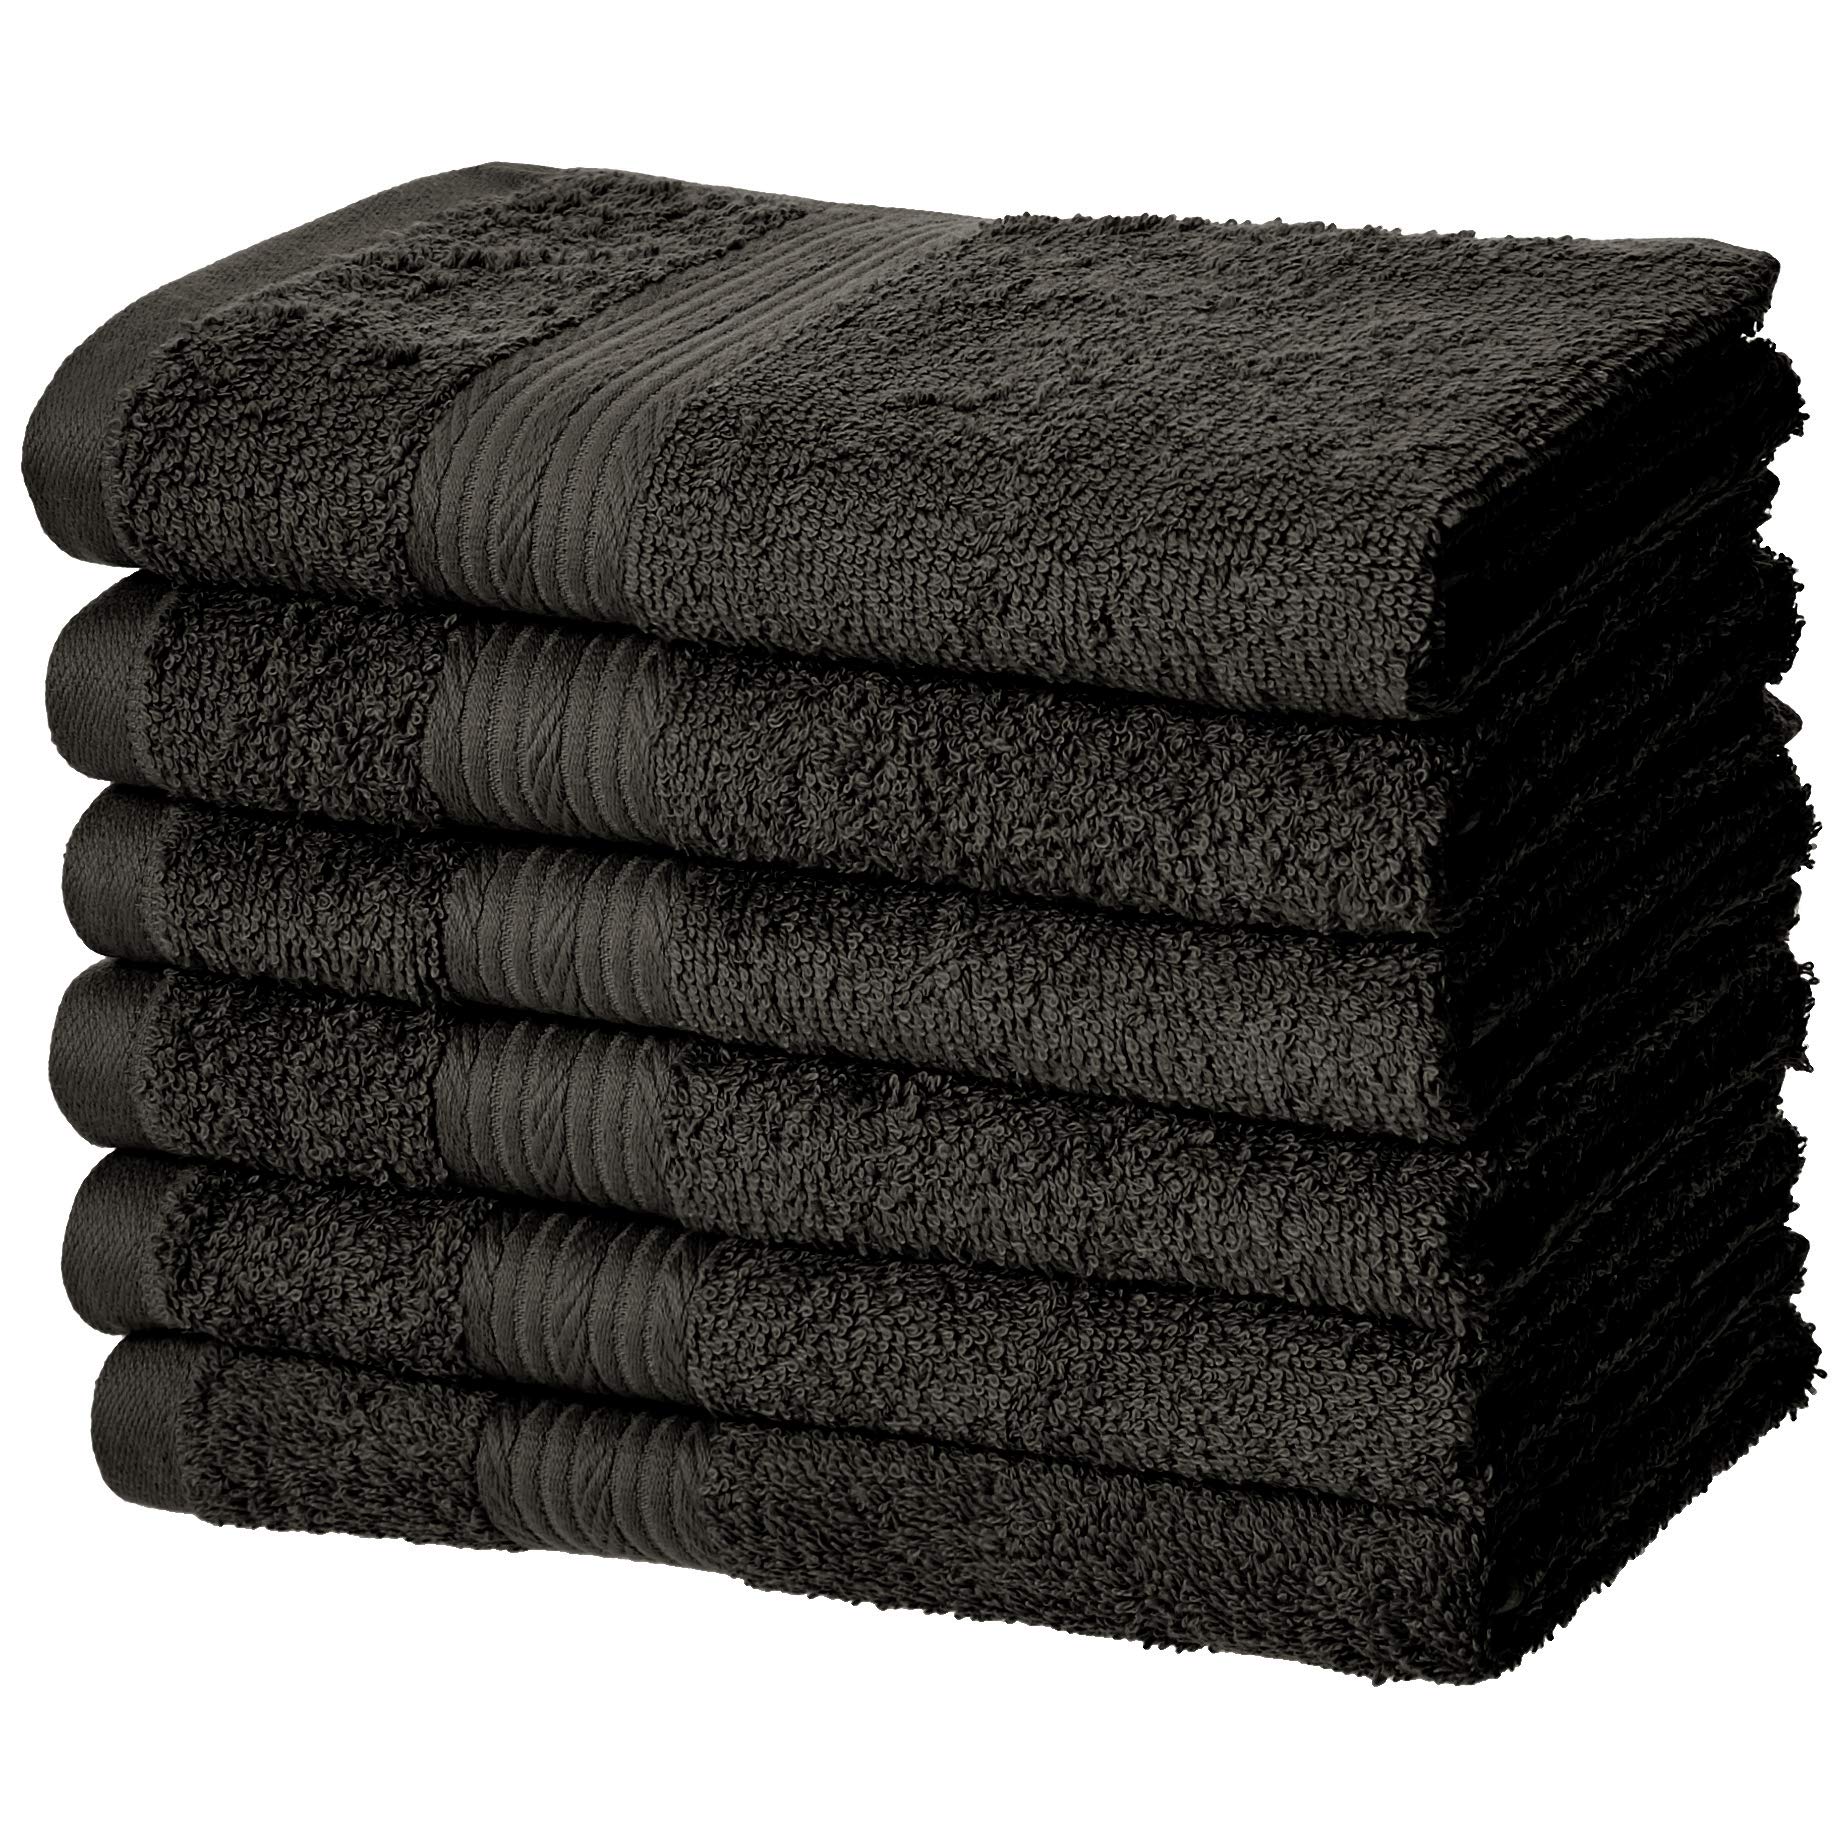 Amazon Basics Fade Resistant Cotton Washcloth, Black - Pack of 6